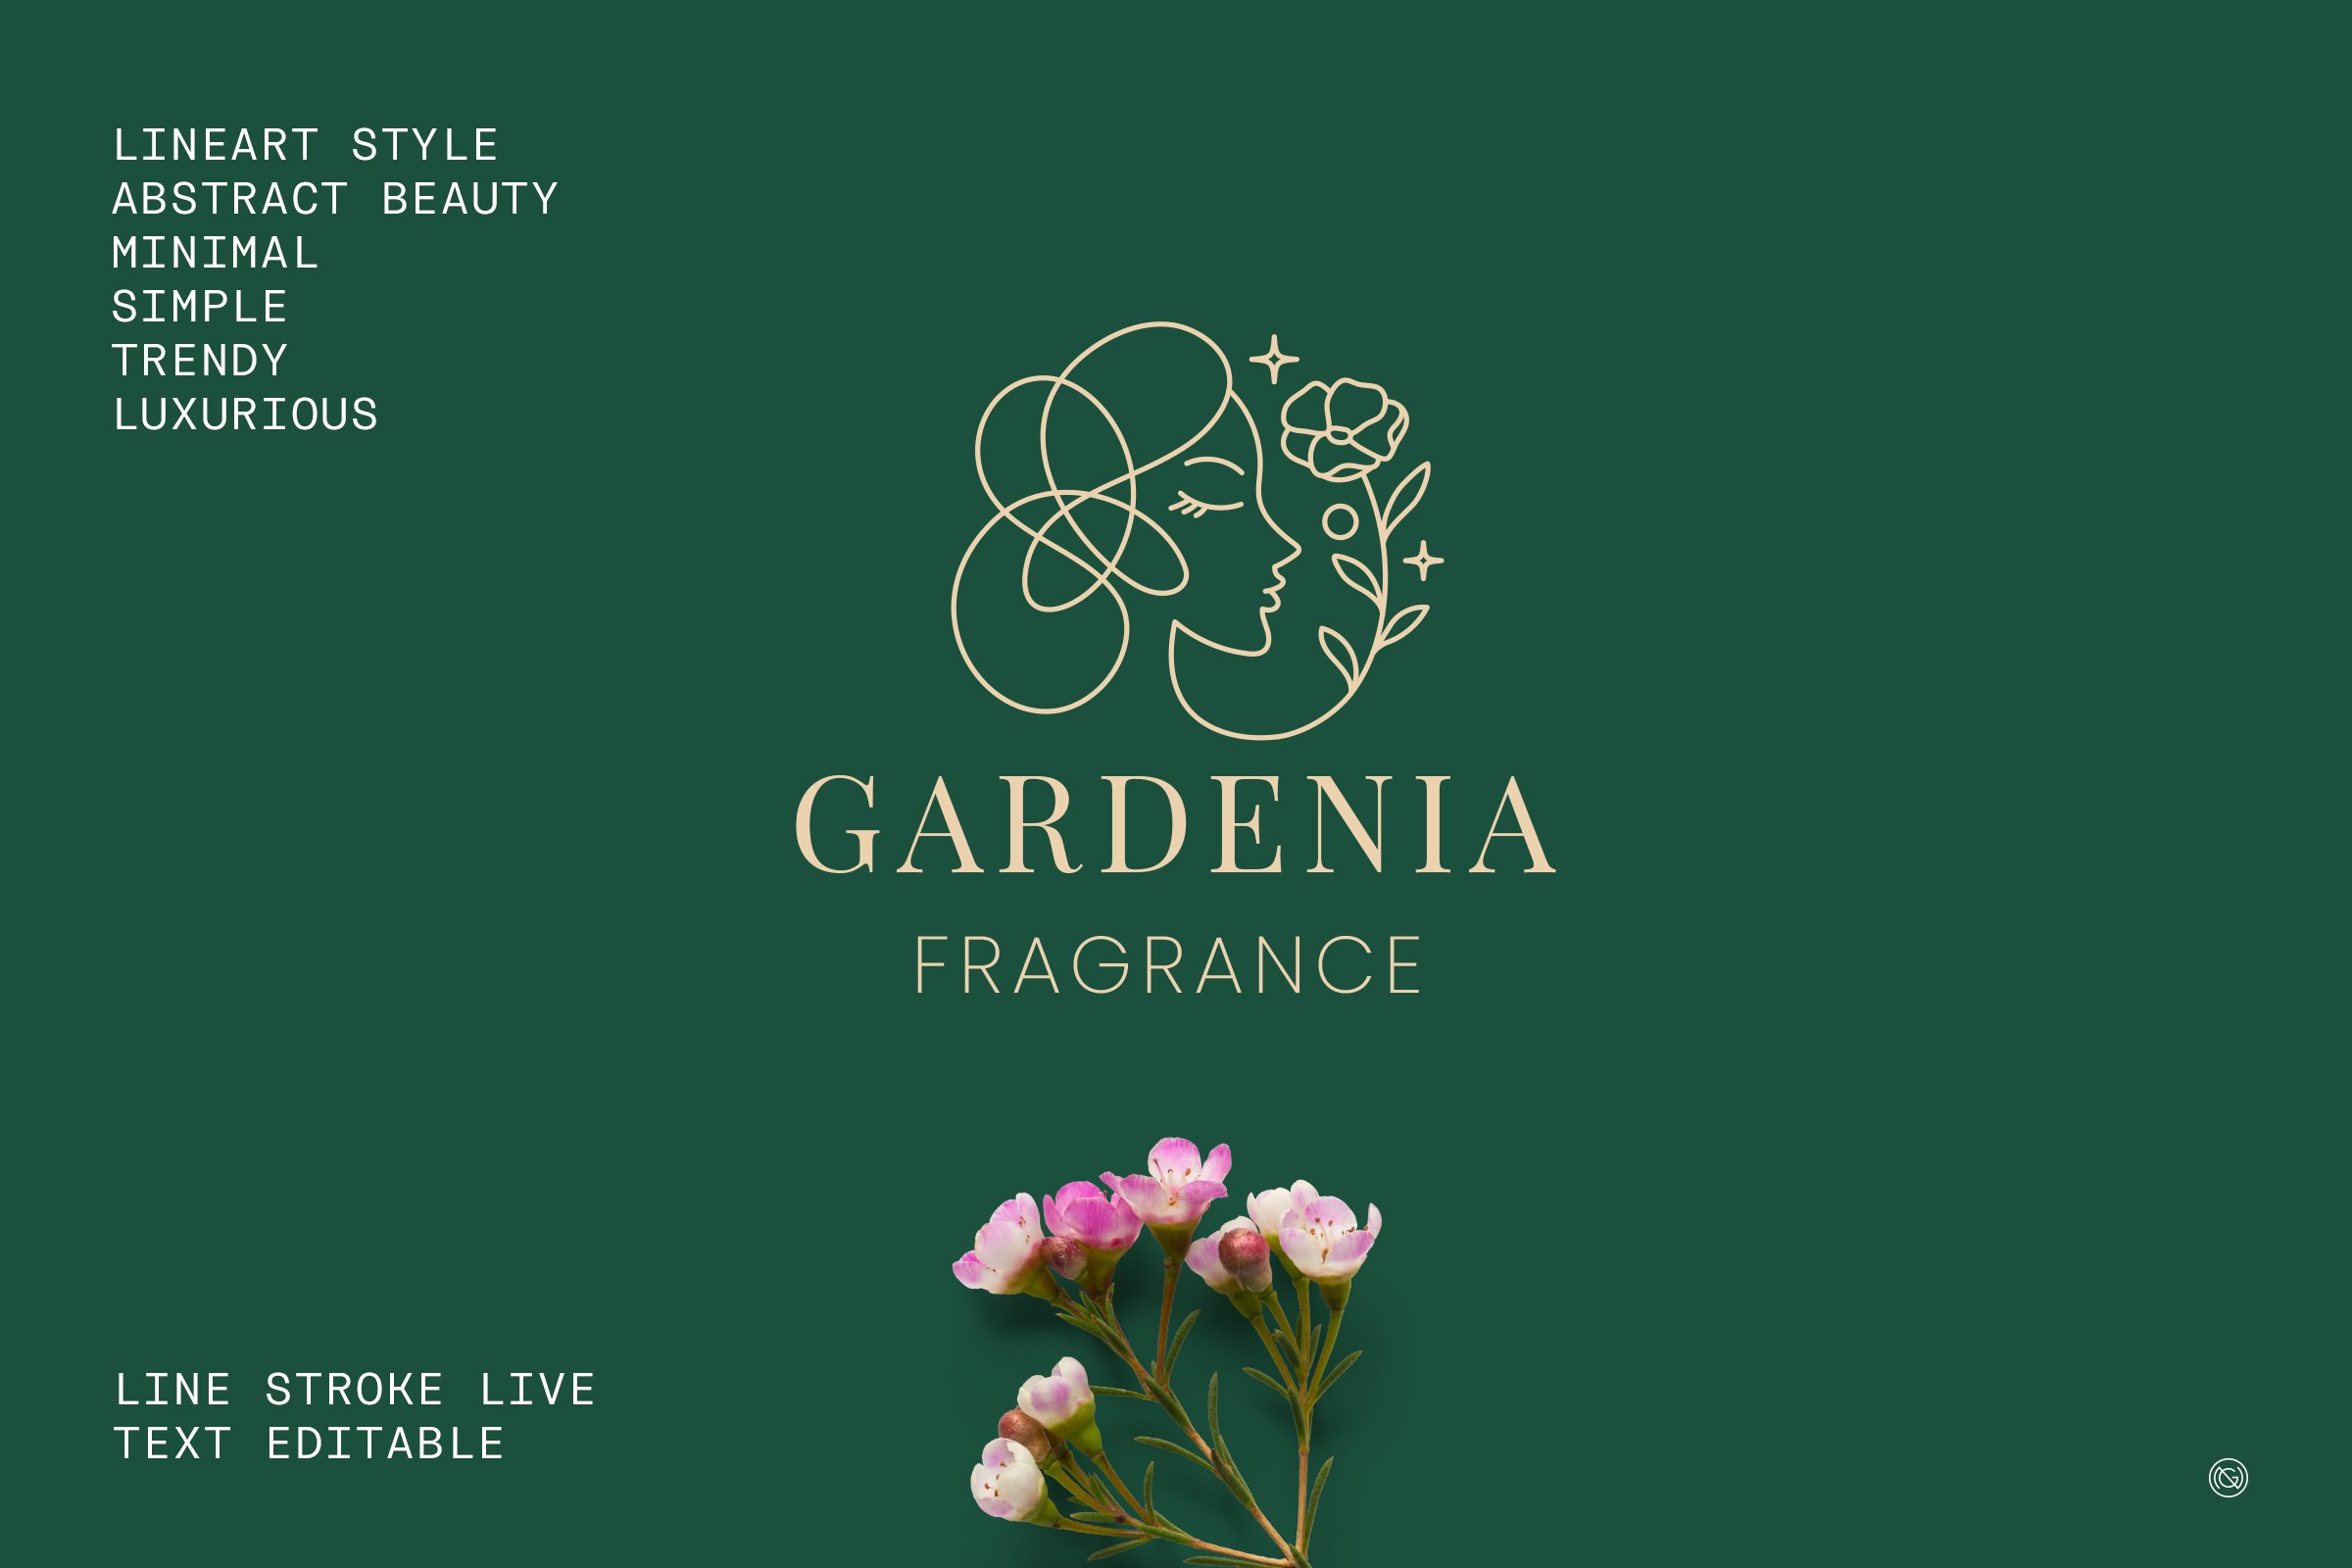 Gardenia Logo Template cover image.